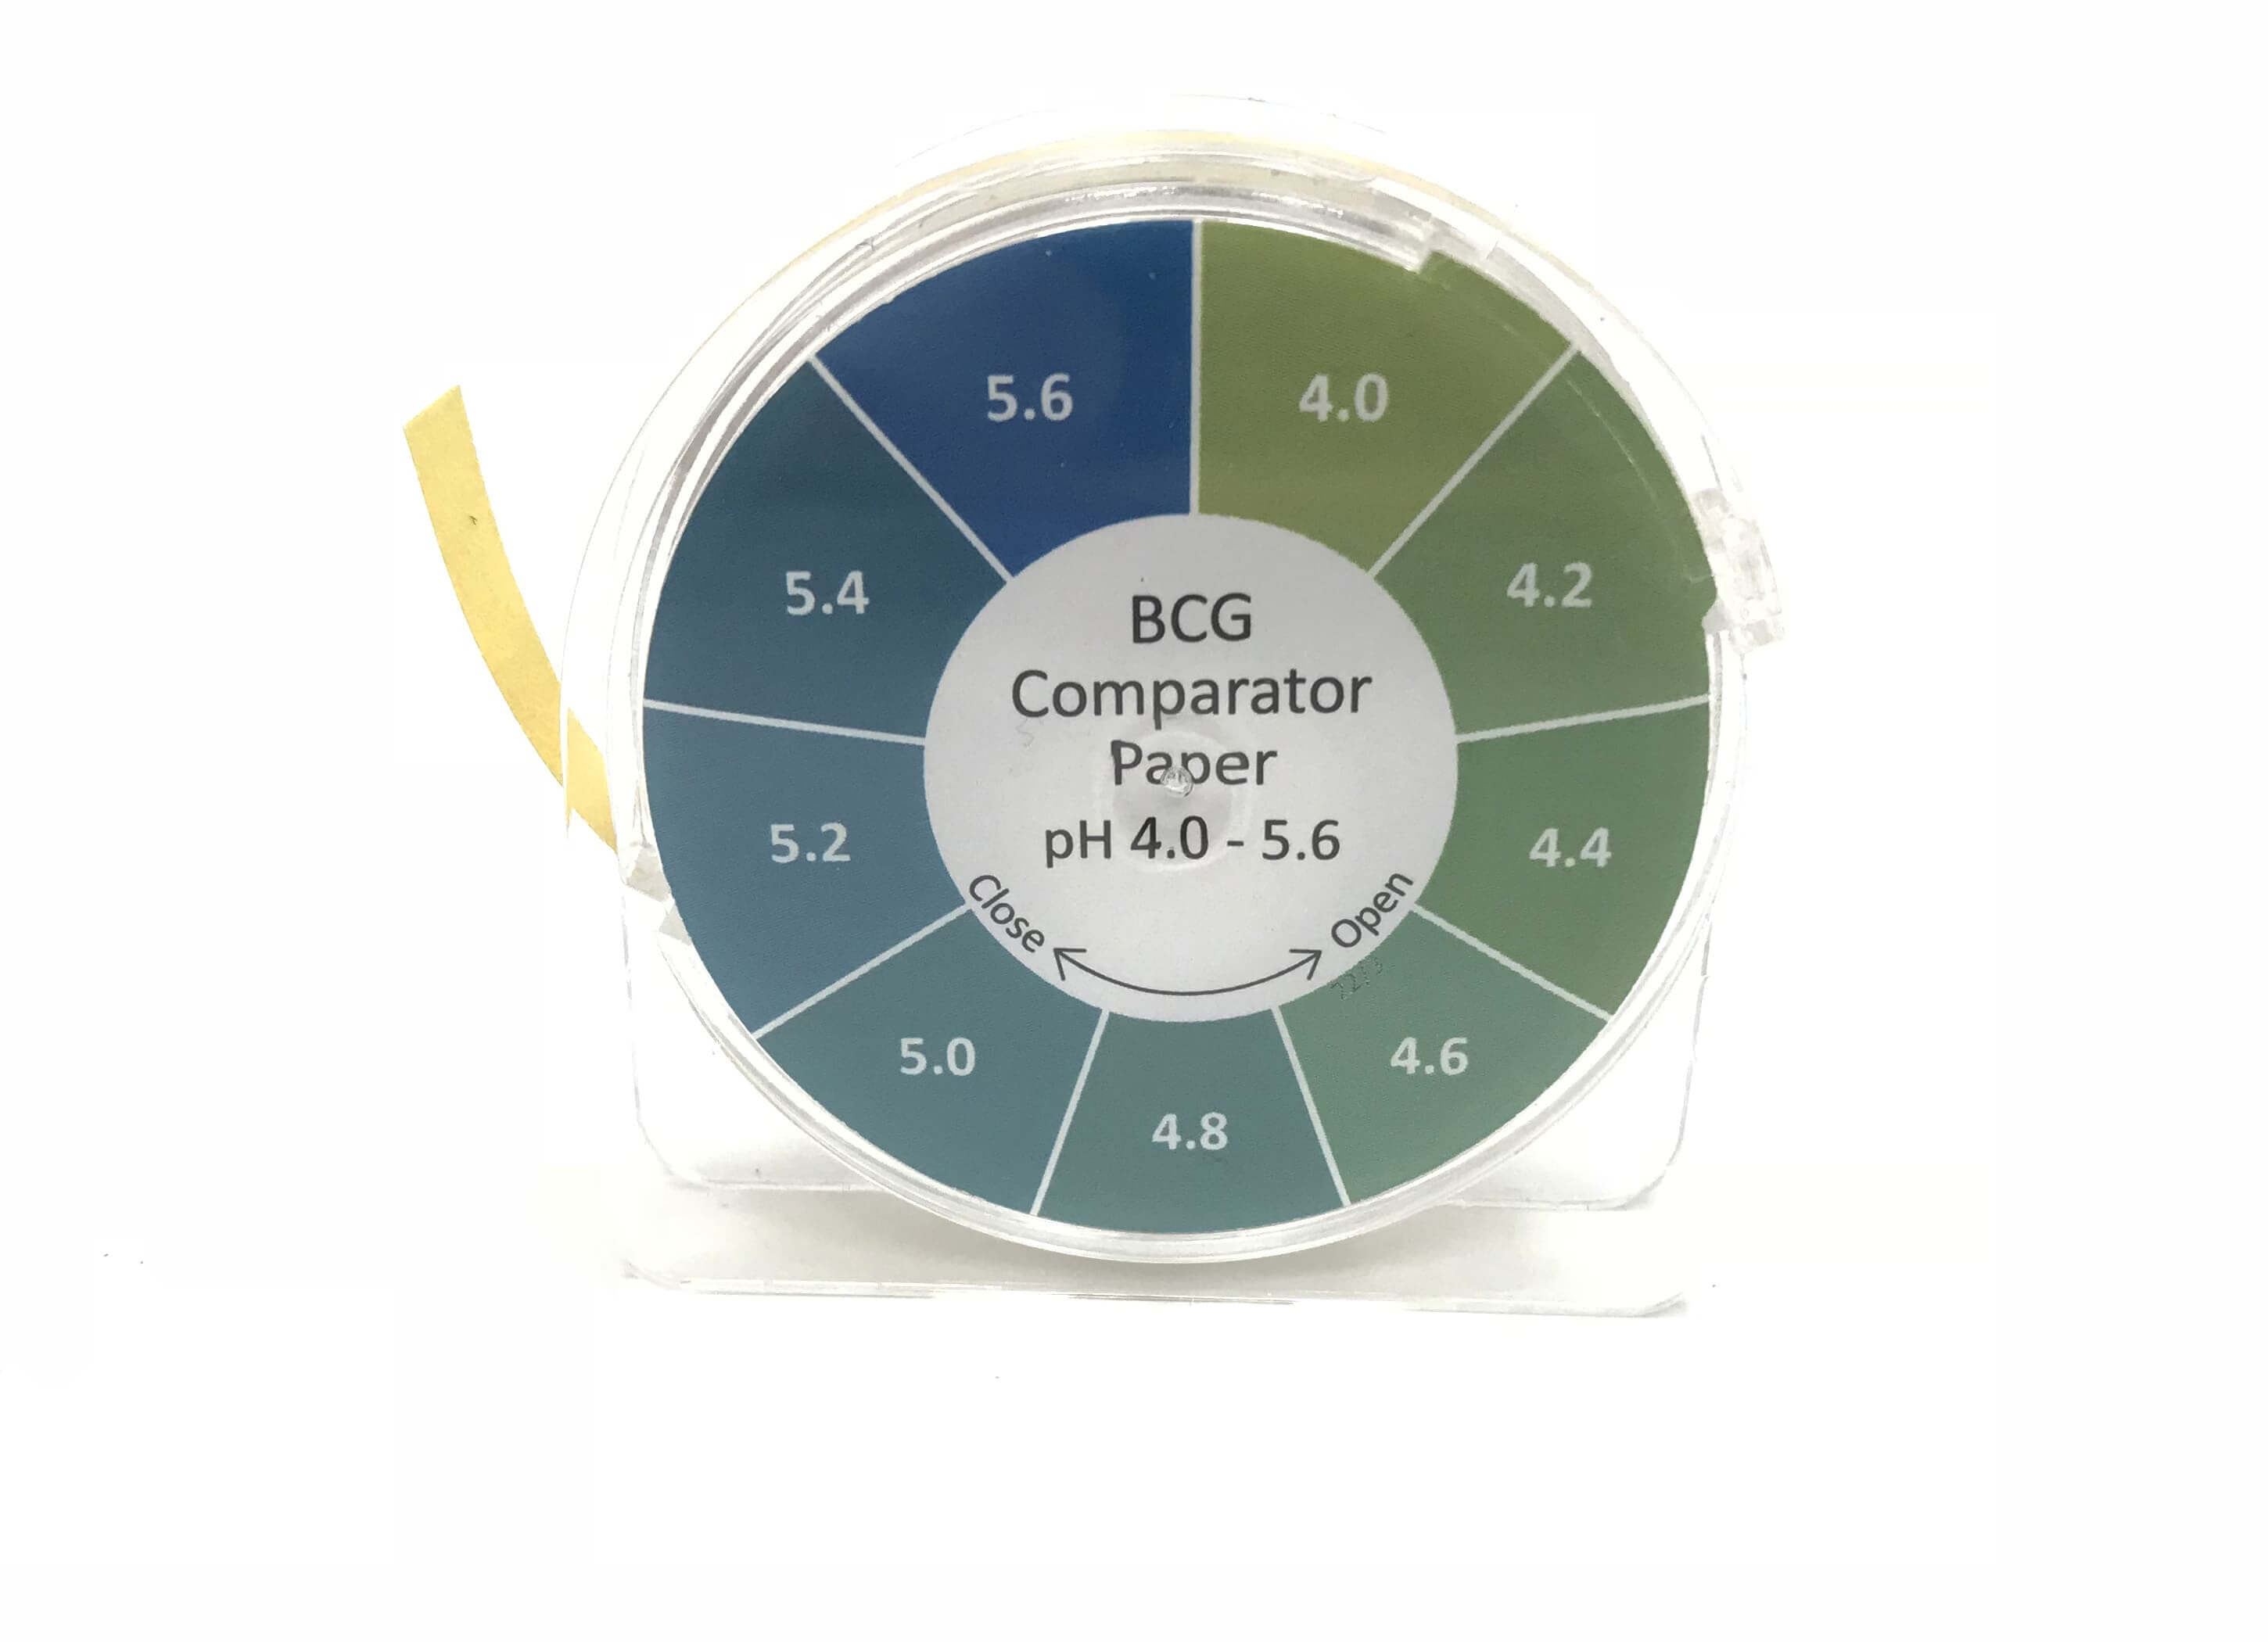 BCG Comparator Paper pH 4.0 - 5.6